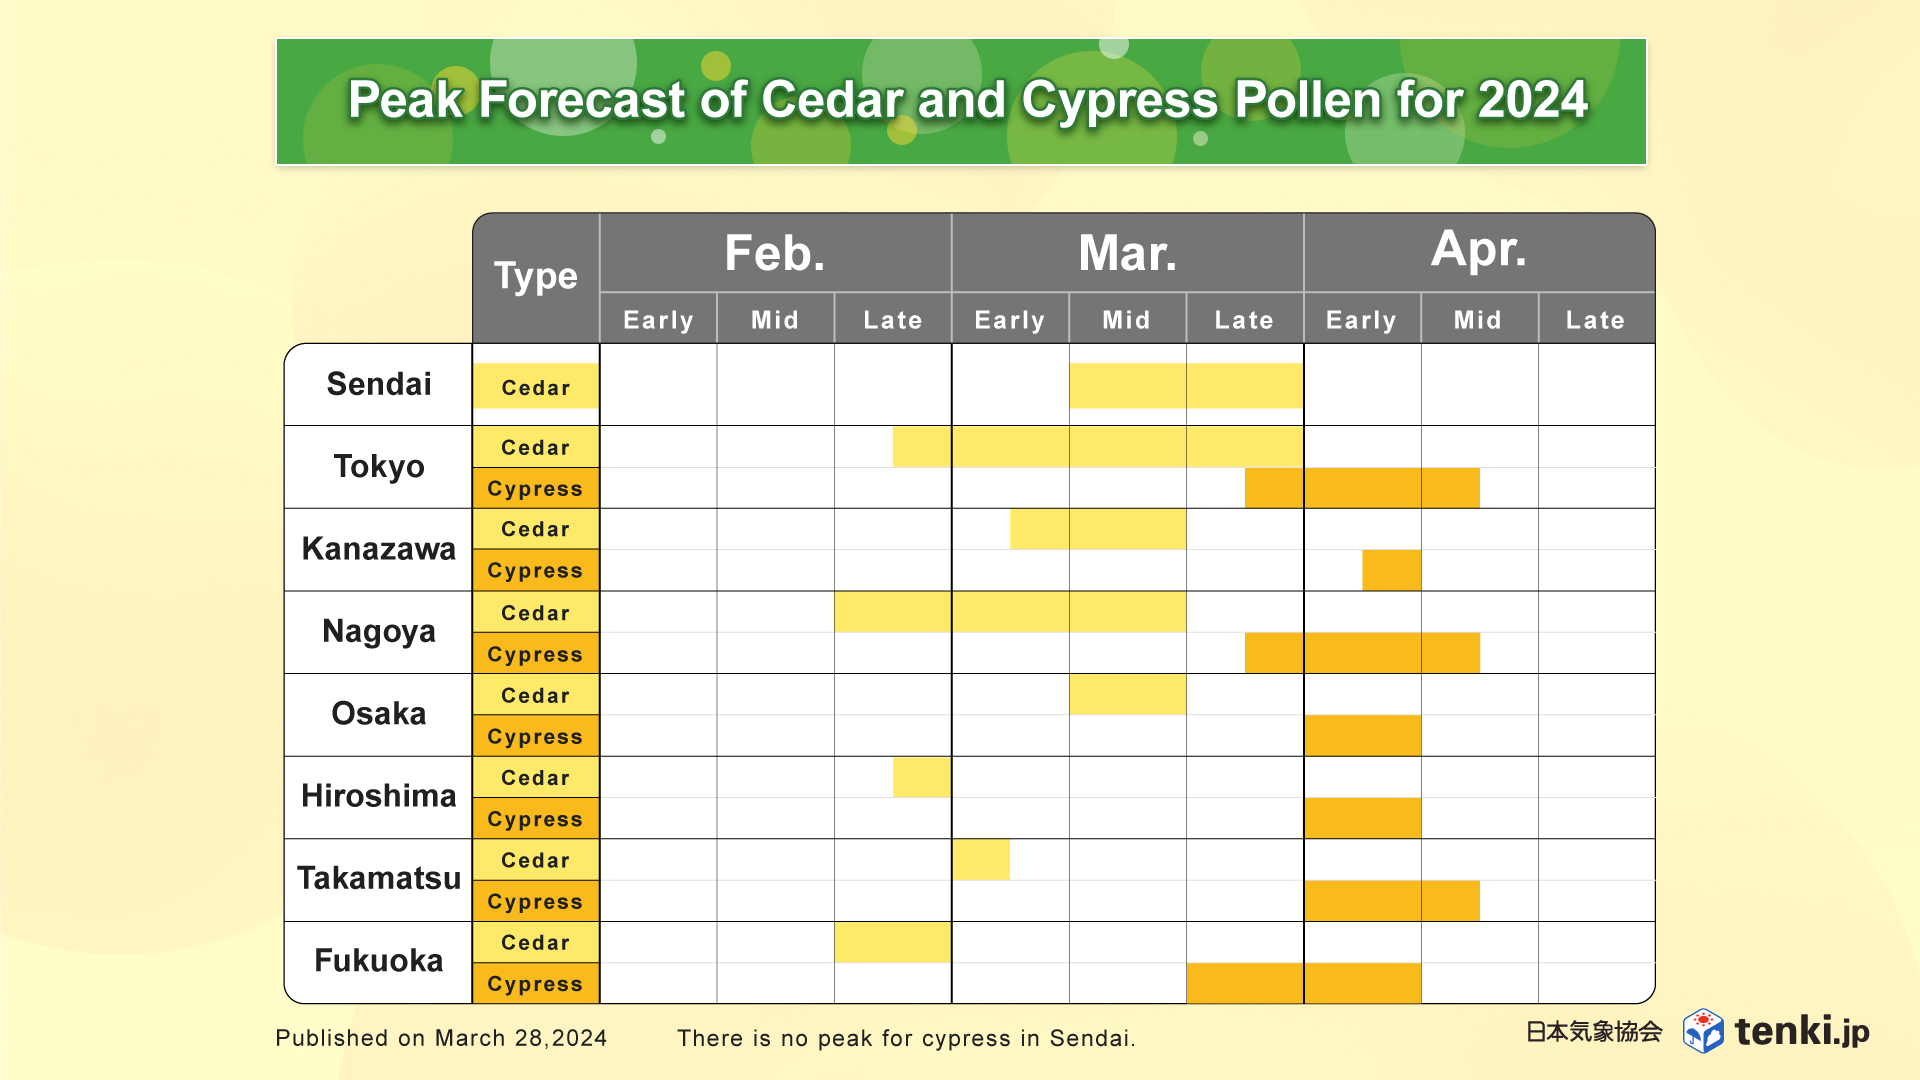 Peak Period of Cedar and Cypress Pollen